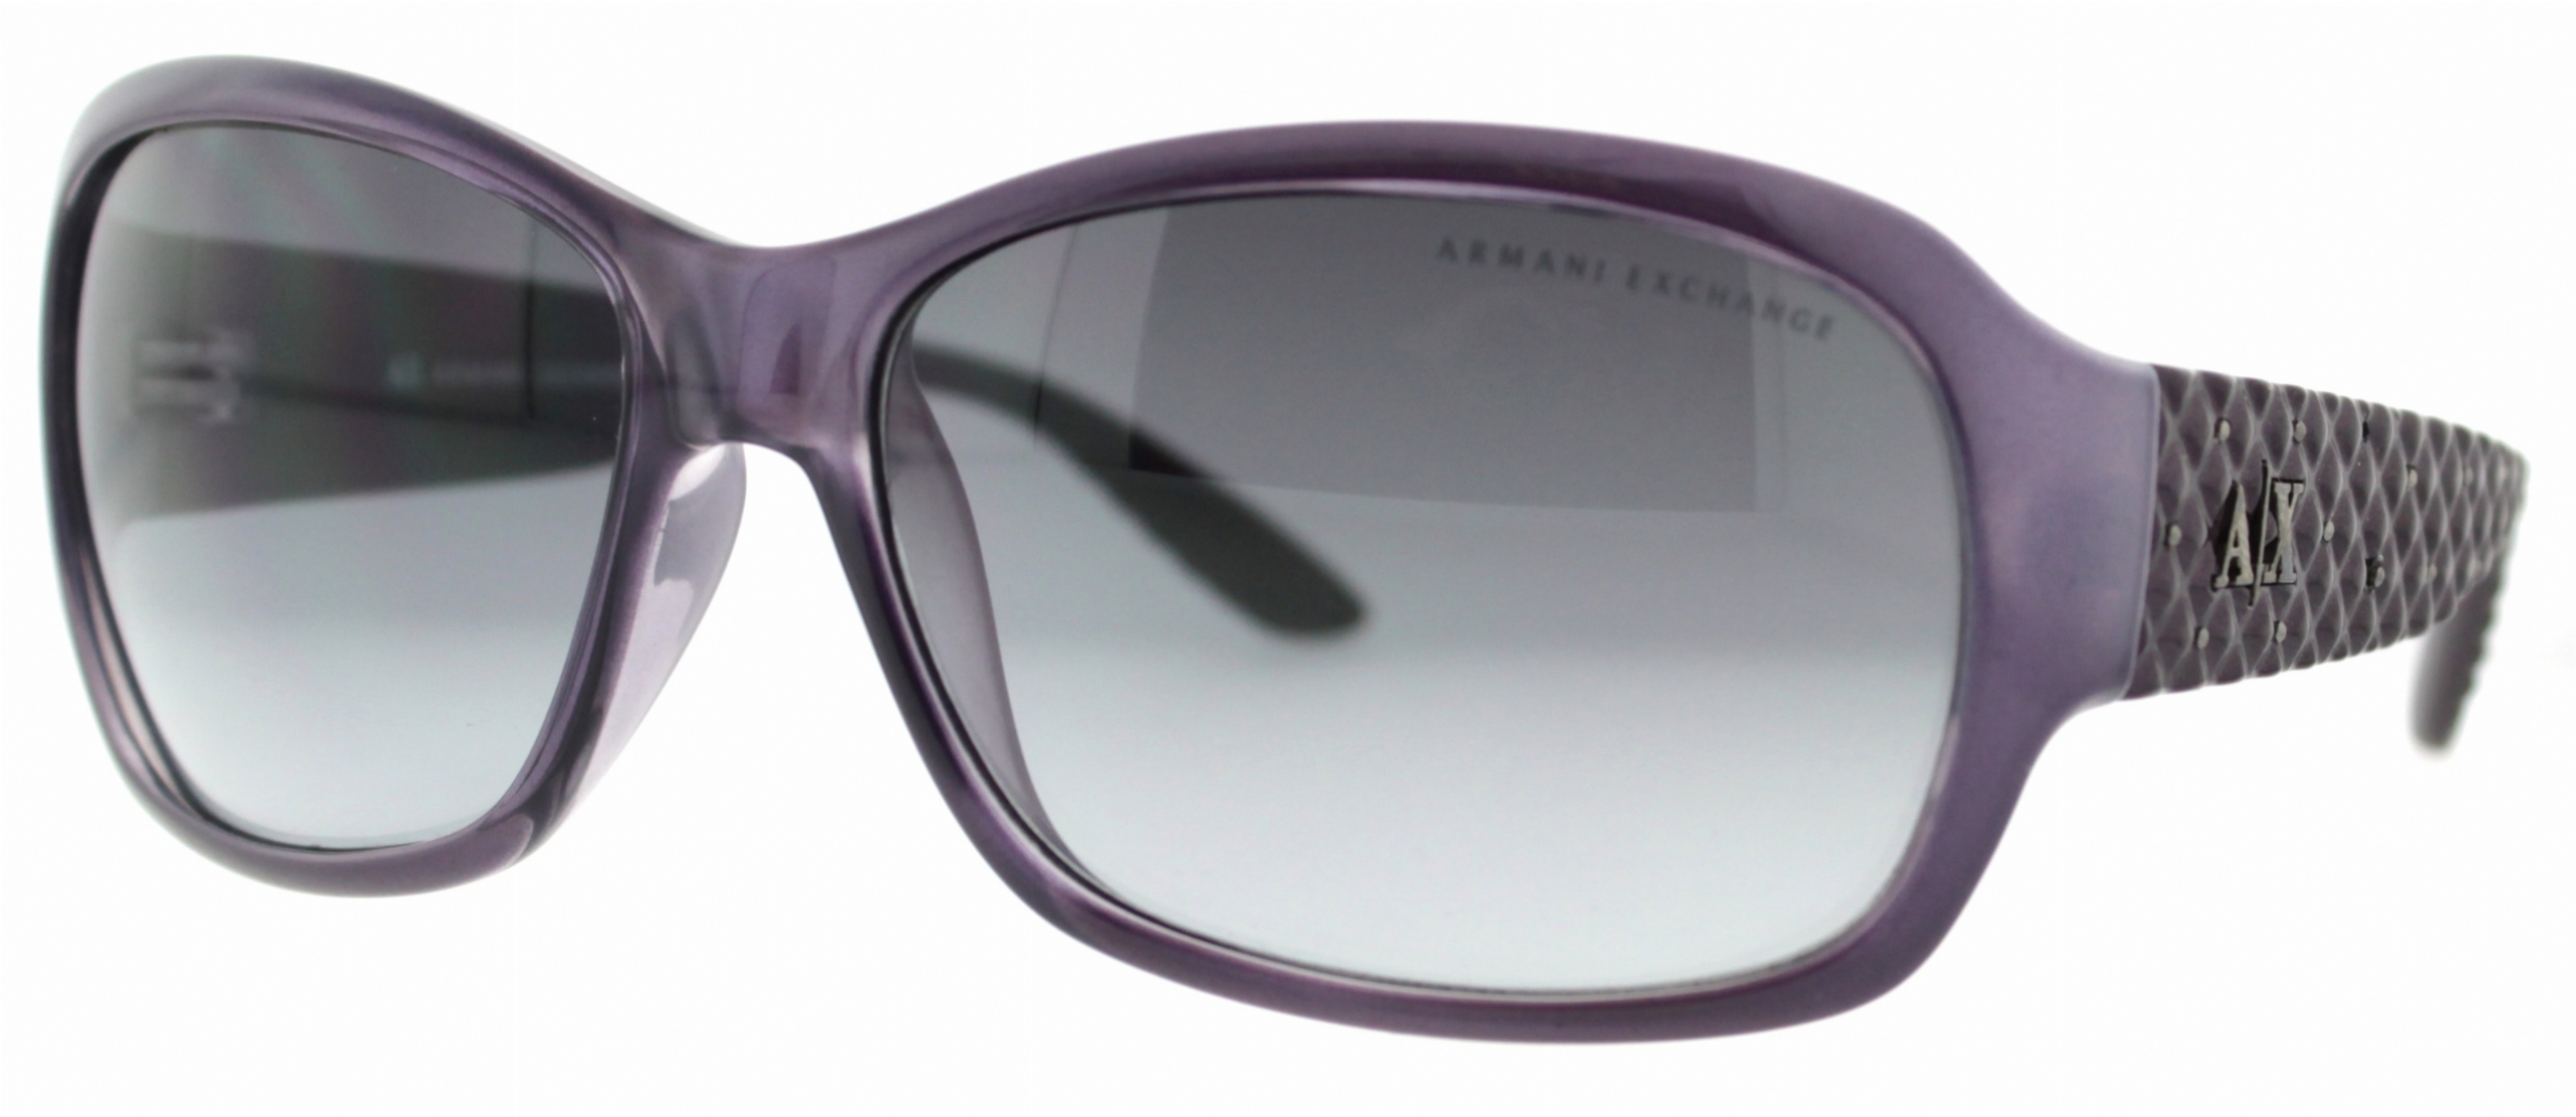 Buy Armani Exchange Sunglasses directly from OpticsFast.com